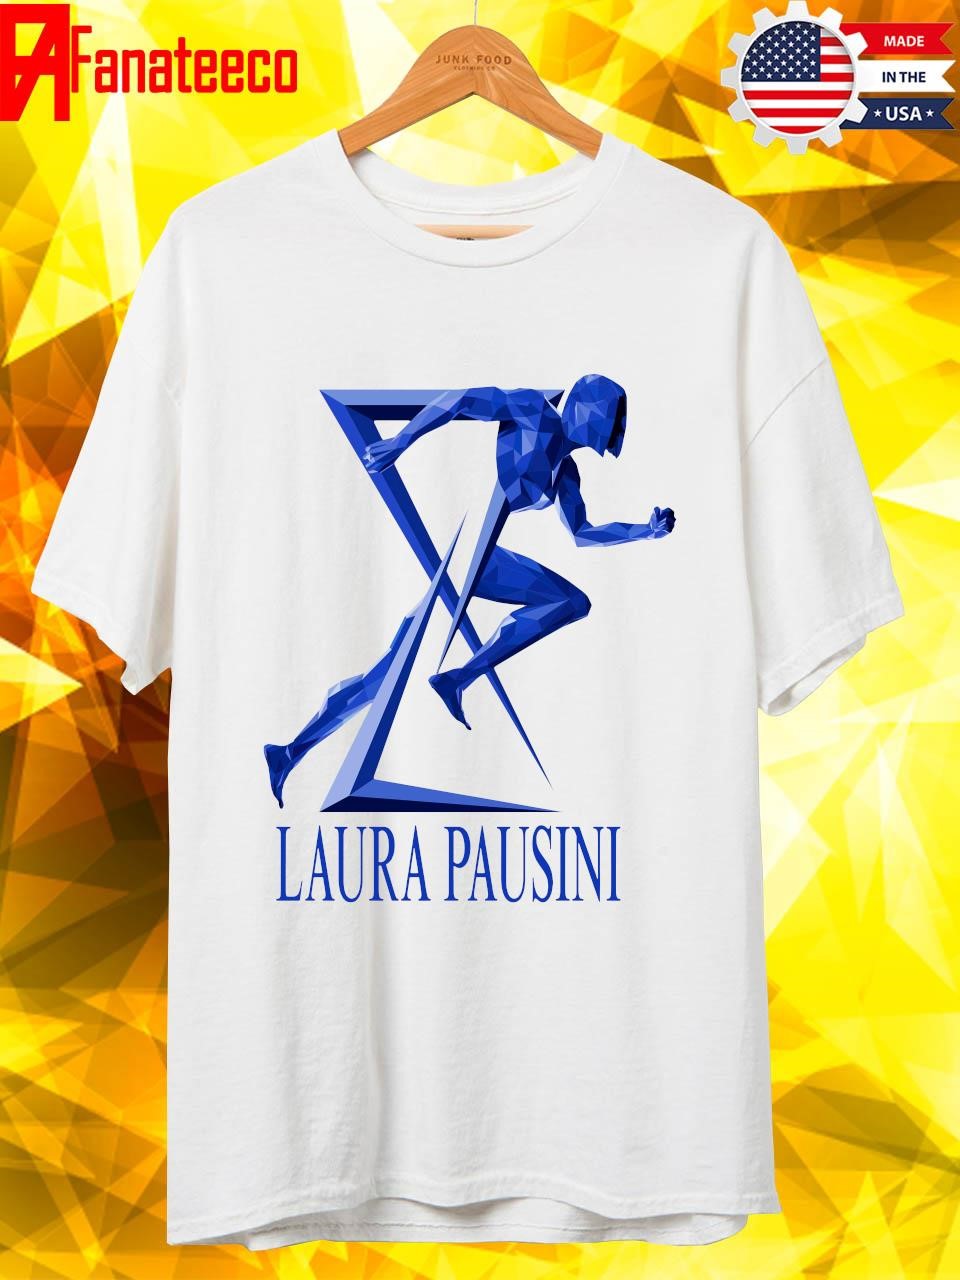 Laura pausini logo shirt